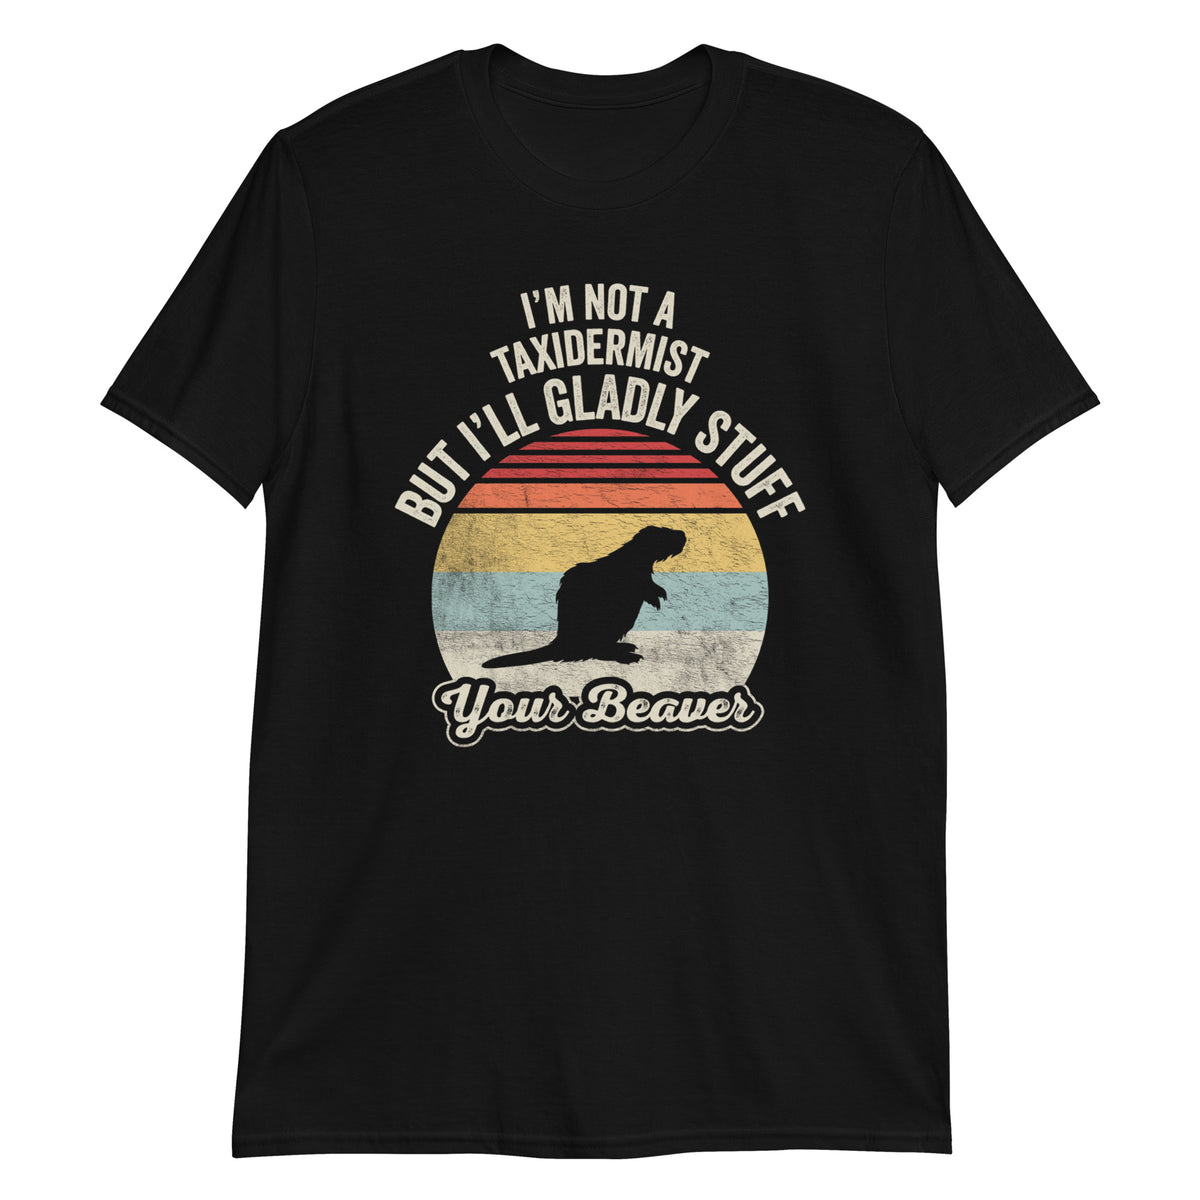 I'm Not A Taxidermist But I'll Gladly Stuff Your Beaver T-Shirt